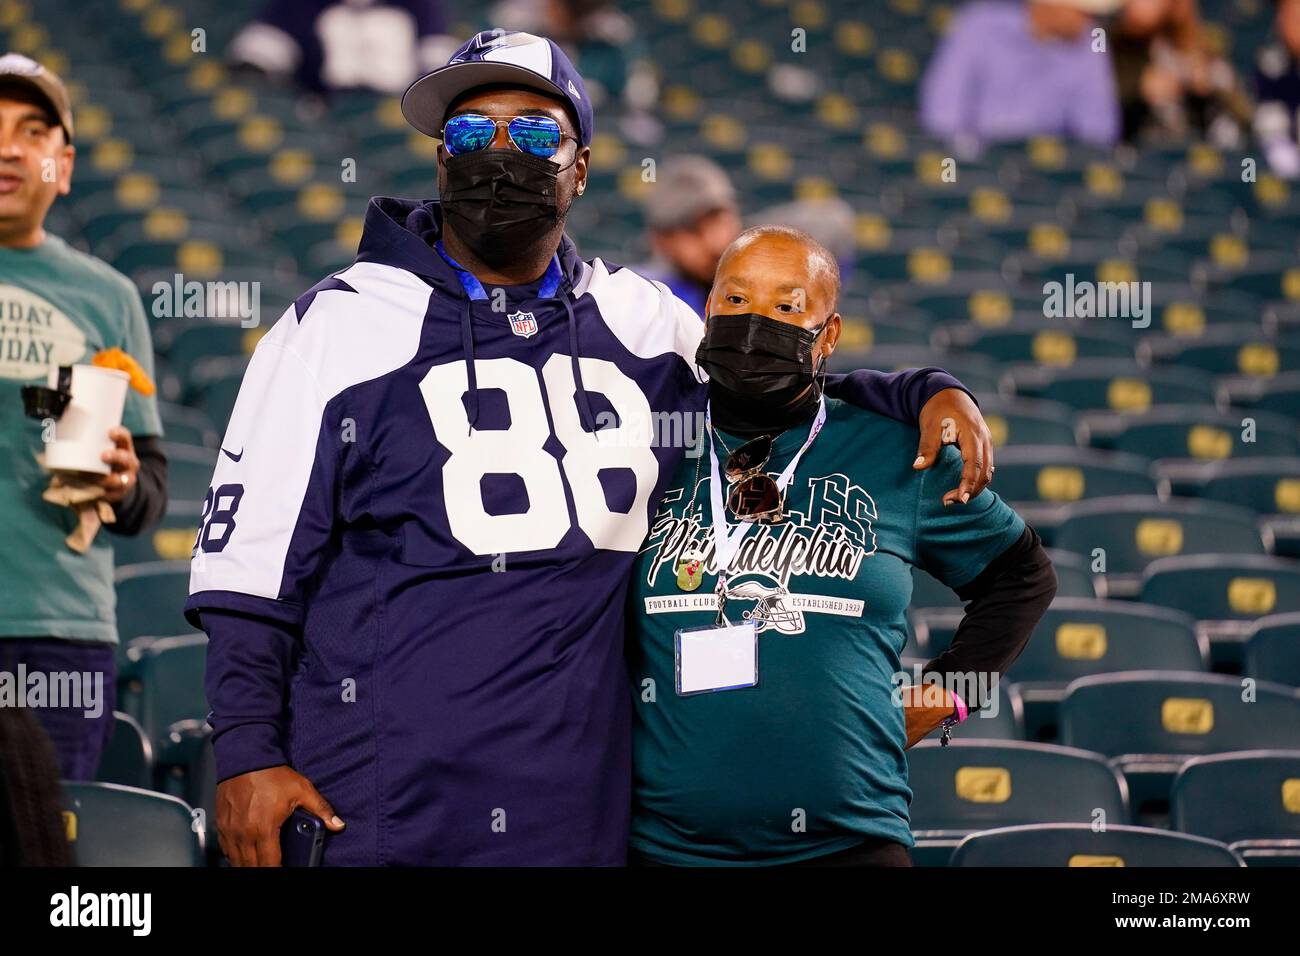 A Dallas Cowboys fan and a Philadelphia Eagles fan pose for a